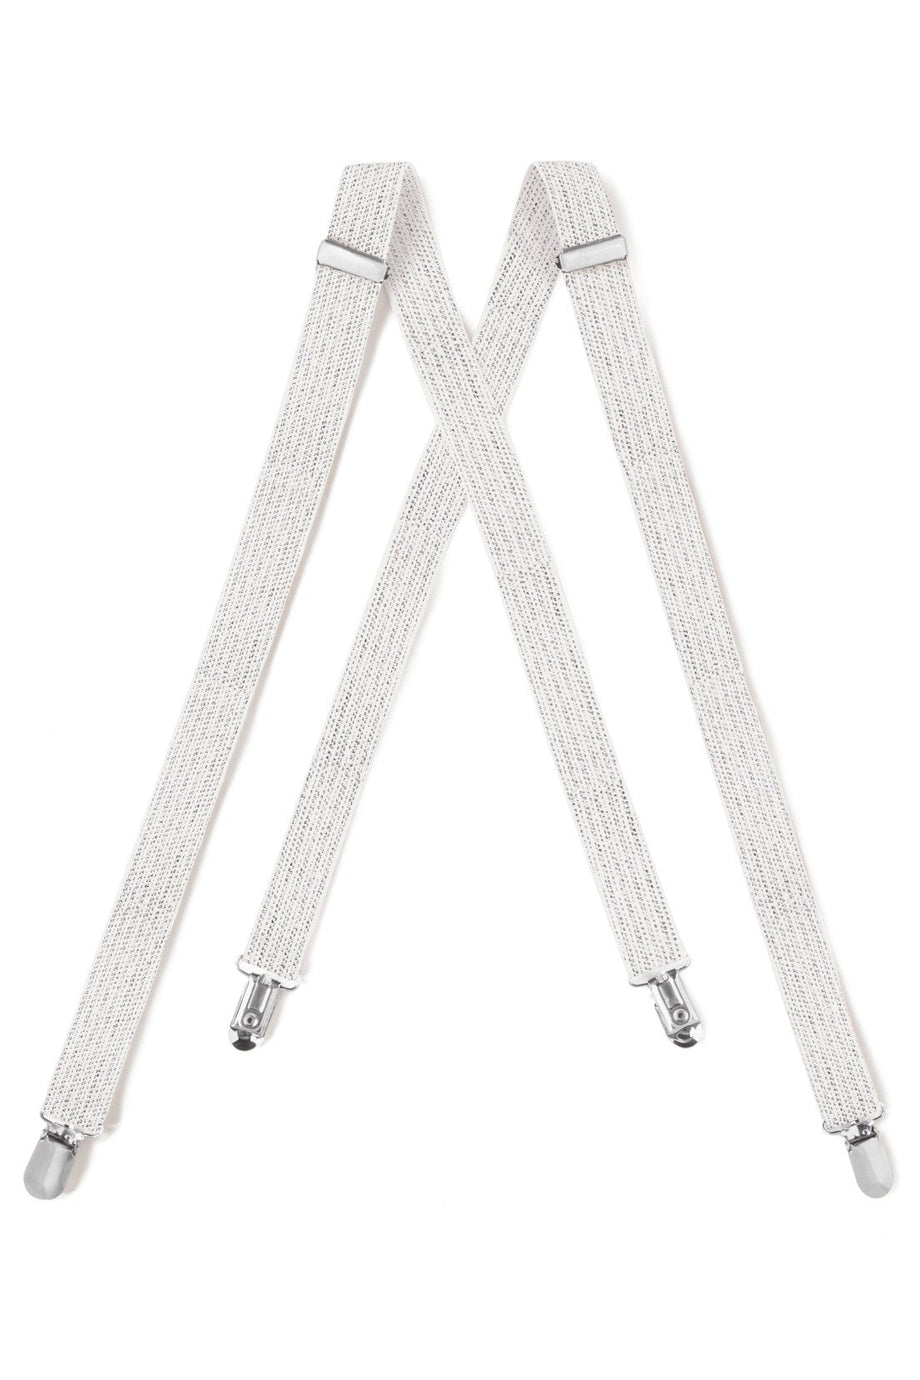 Tux Park "Silver Metallic" Suspenders